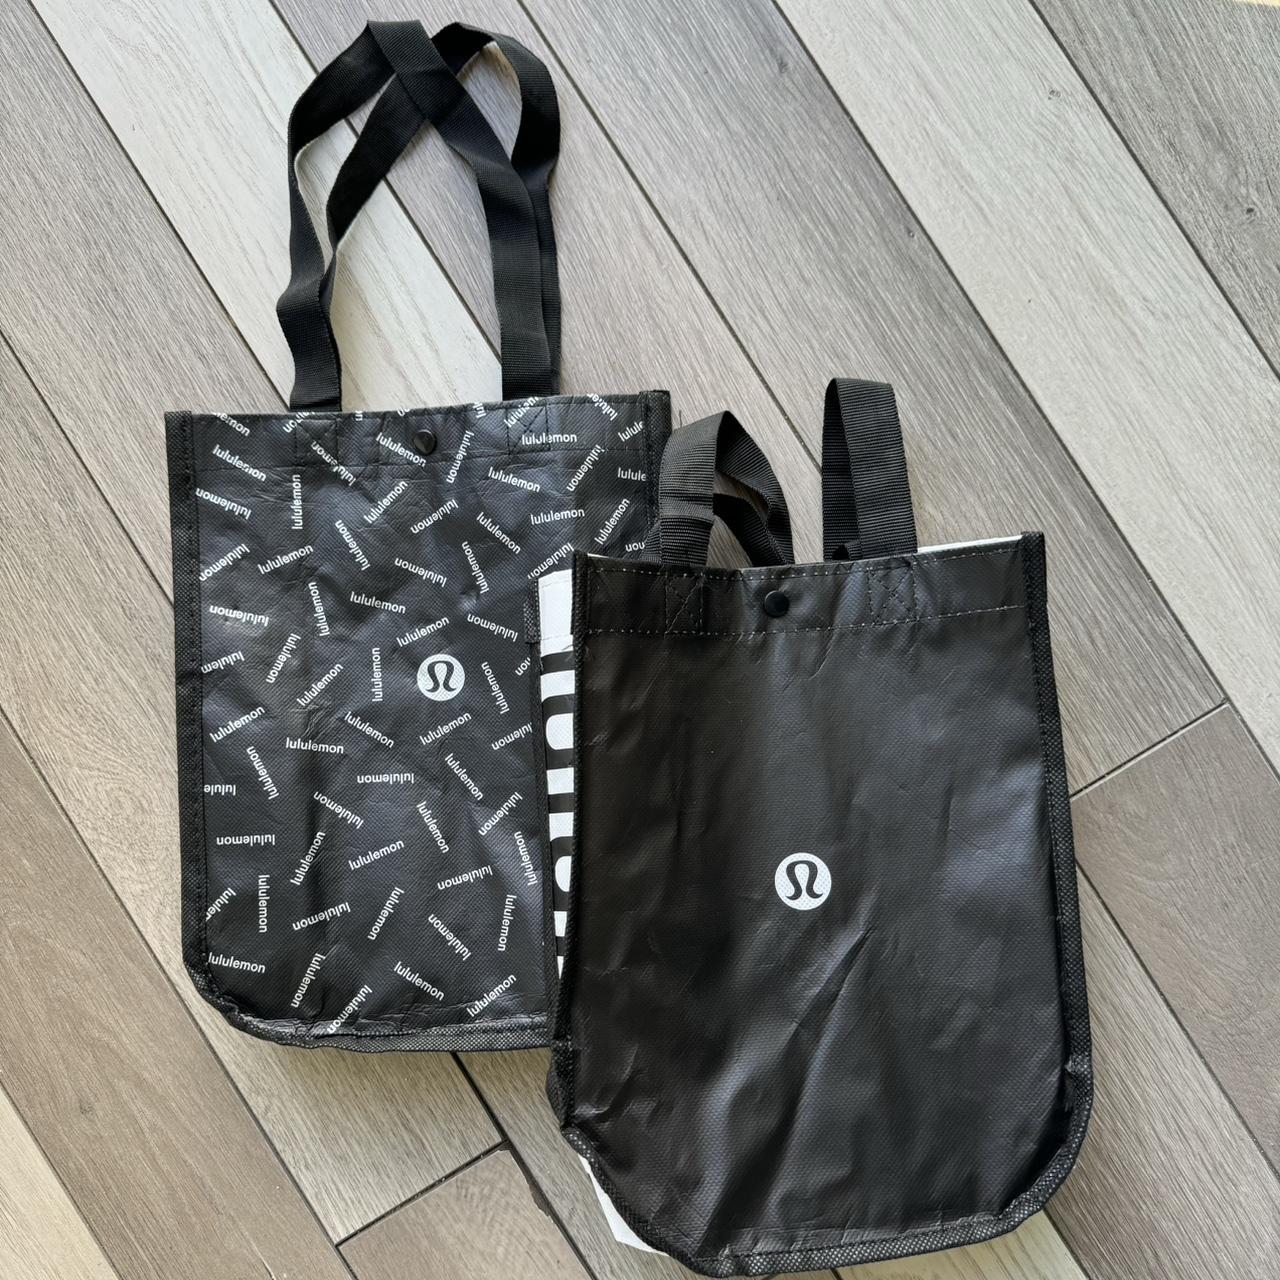 Lululemon store bags 5 little bags in good - Depop